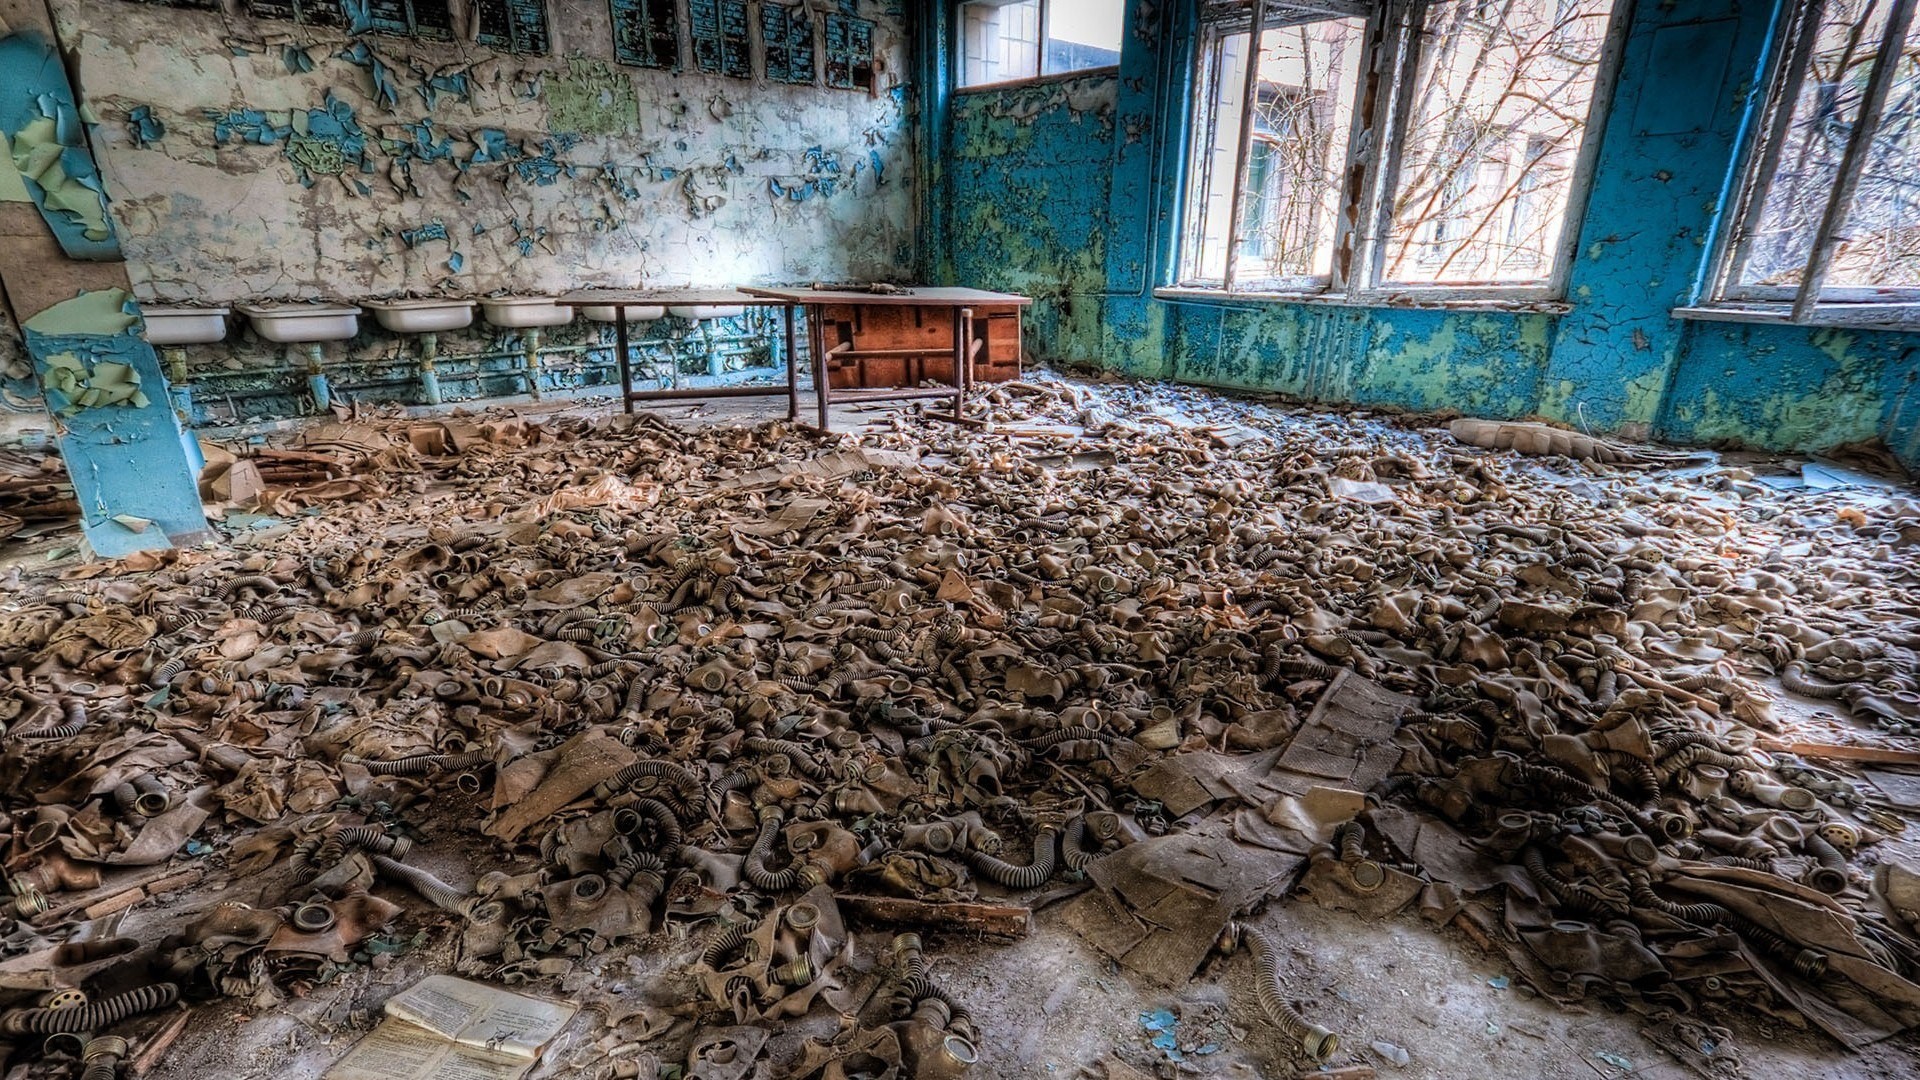 General 1920x1080 interior abandoned window room gas masks HDR empty  Chernobyl table Pripyat radioactive Ukraine